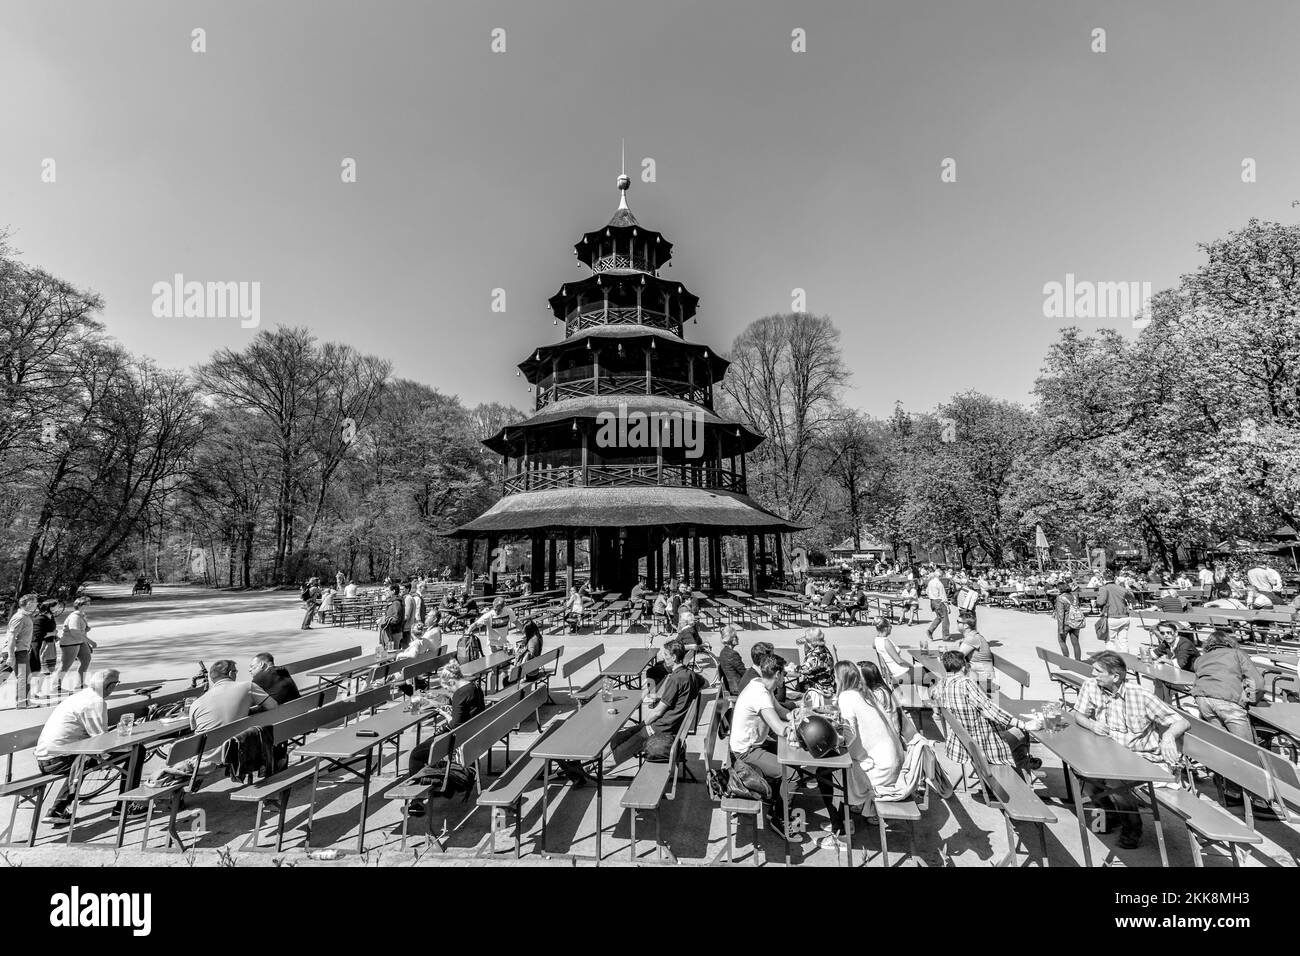 Munich, Germany - April 20, 2015: people enjoy the  Biergarten near Chinese tower in English garden in Munich, Bavaria, Germany. Stock Photo